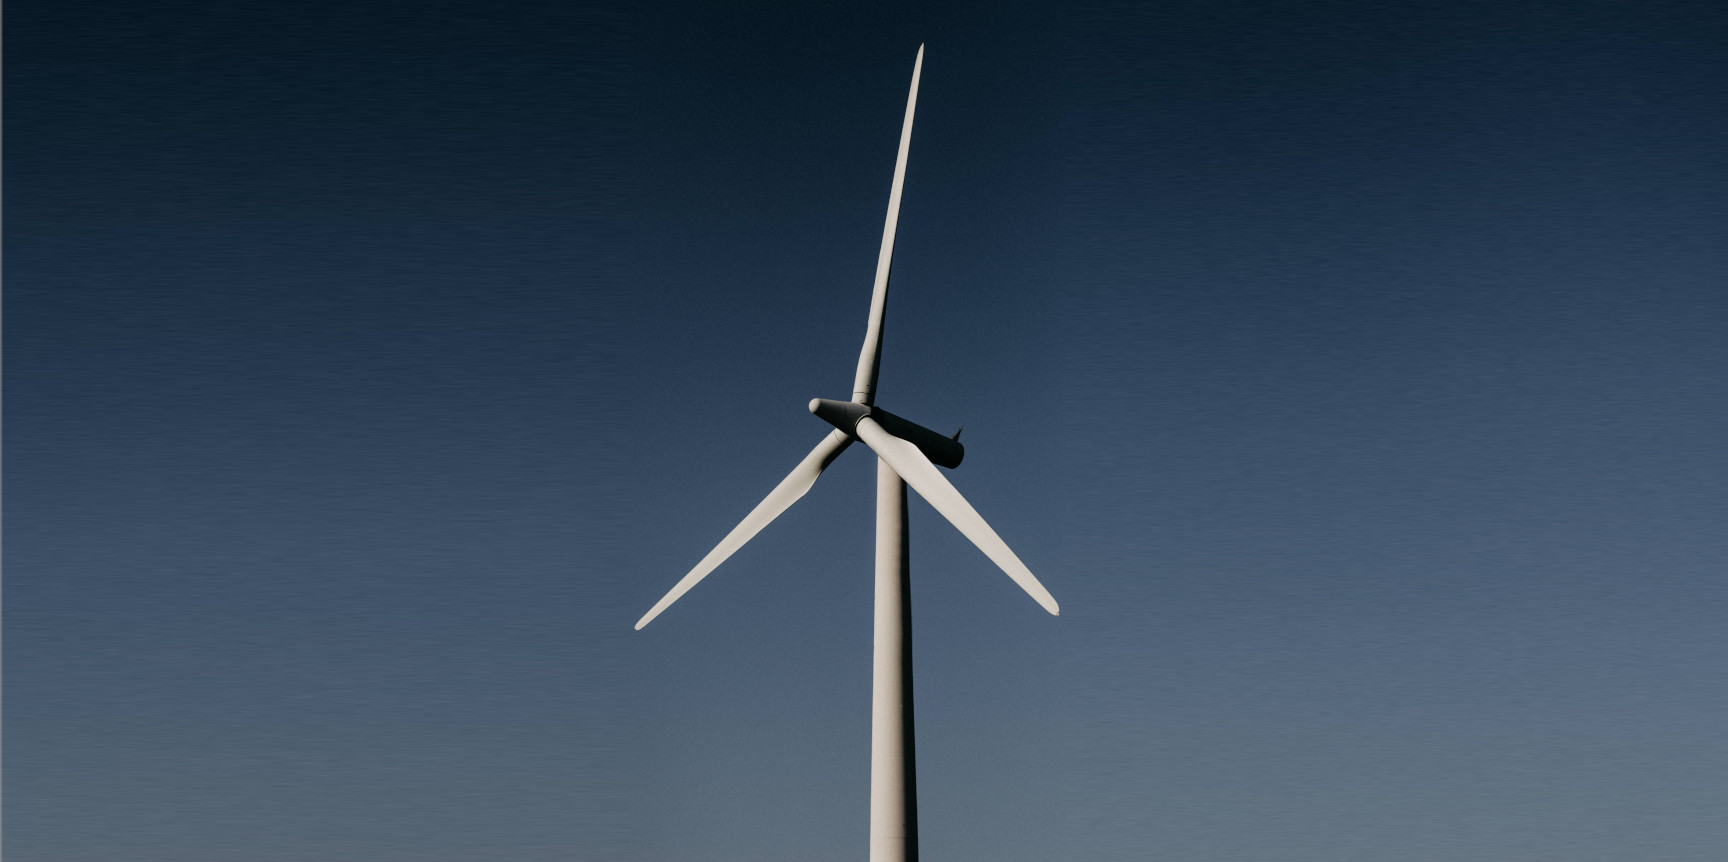 Vergrösserte Ansicht: Windturbine, irgendwo in Yorkshire, UK ( CC0 1.0 / T. Arran / Unsplash / edited by o-media)